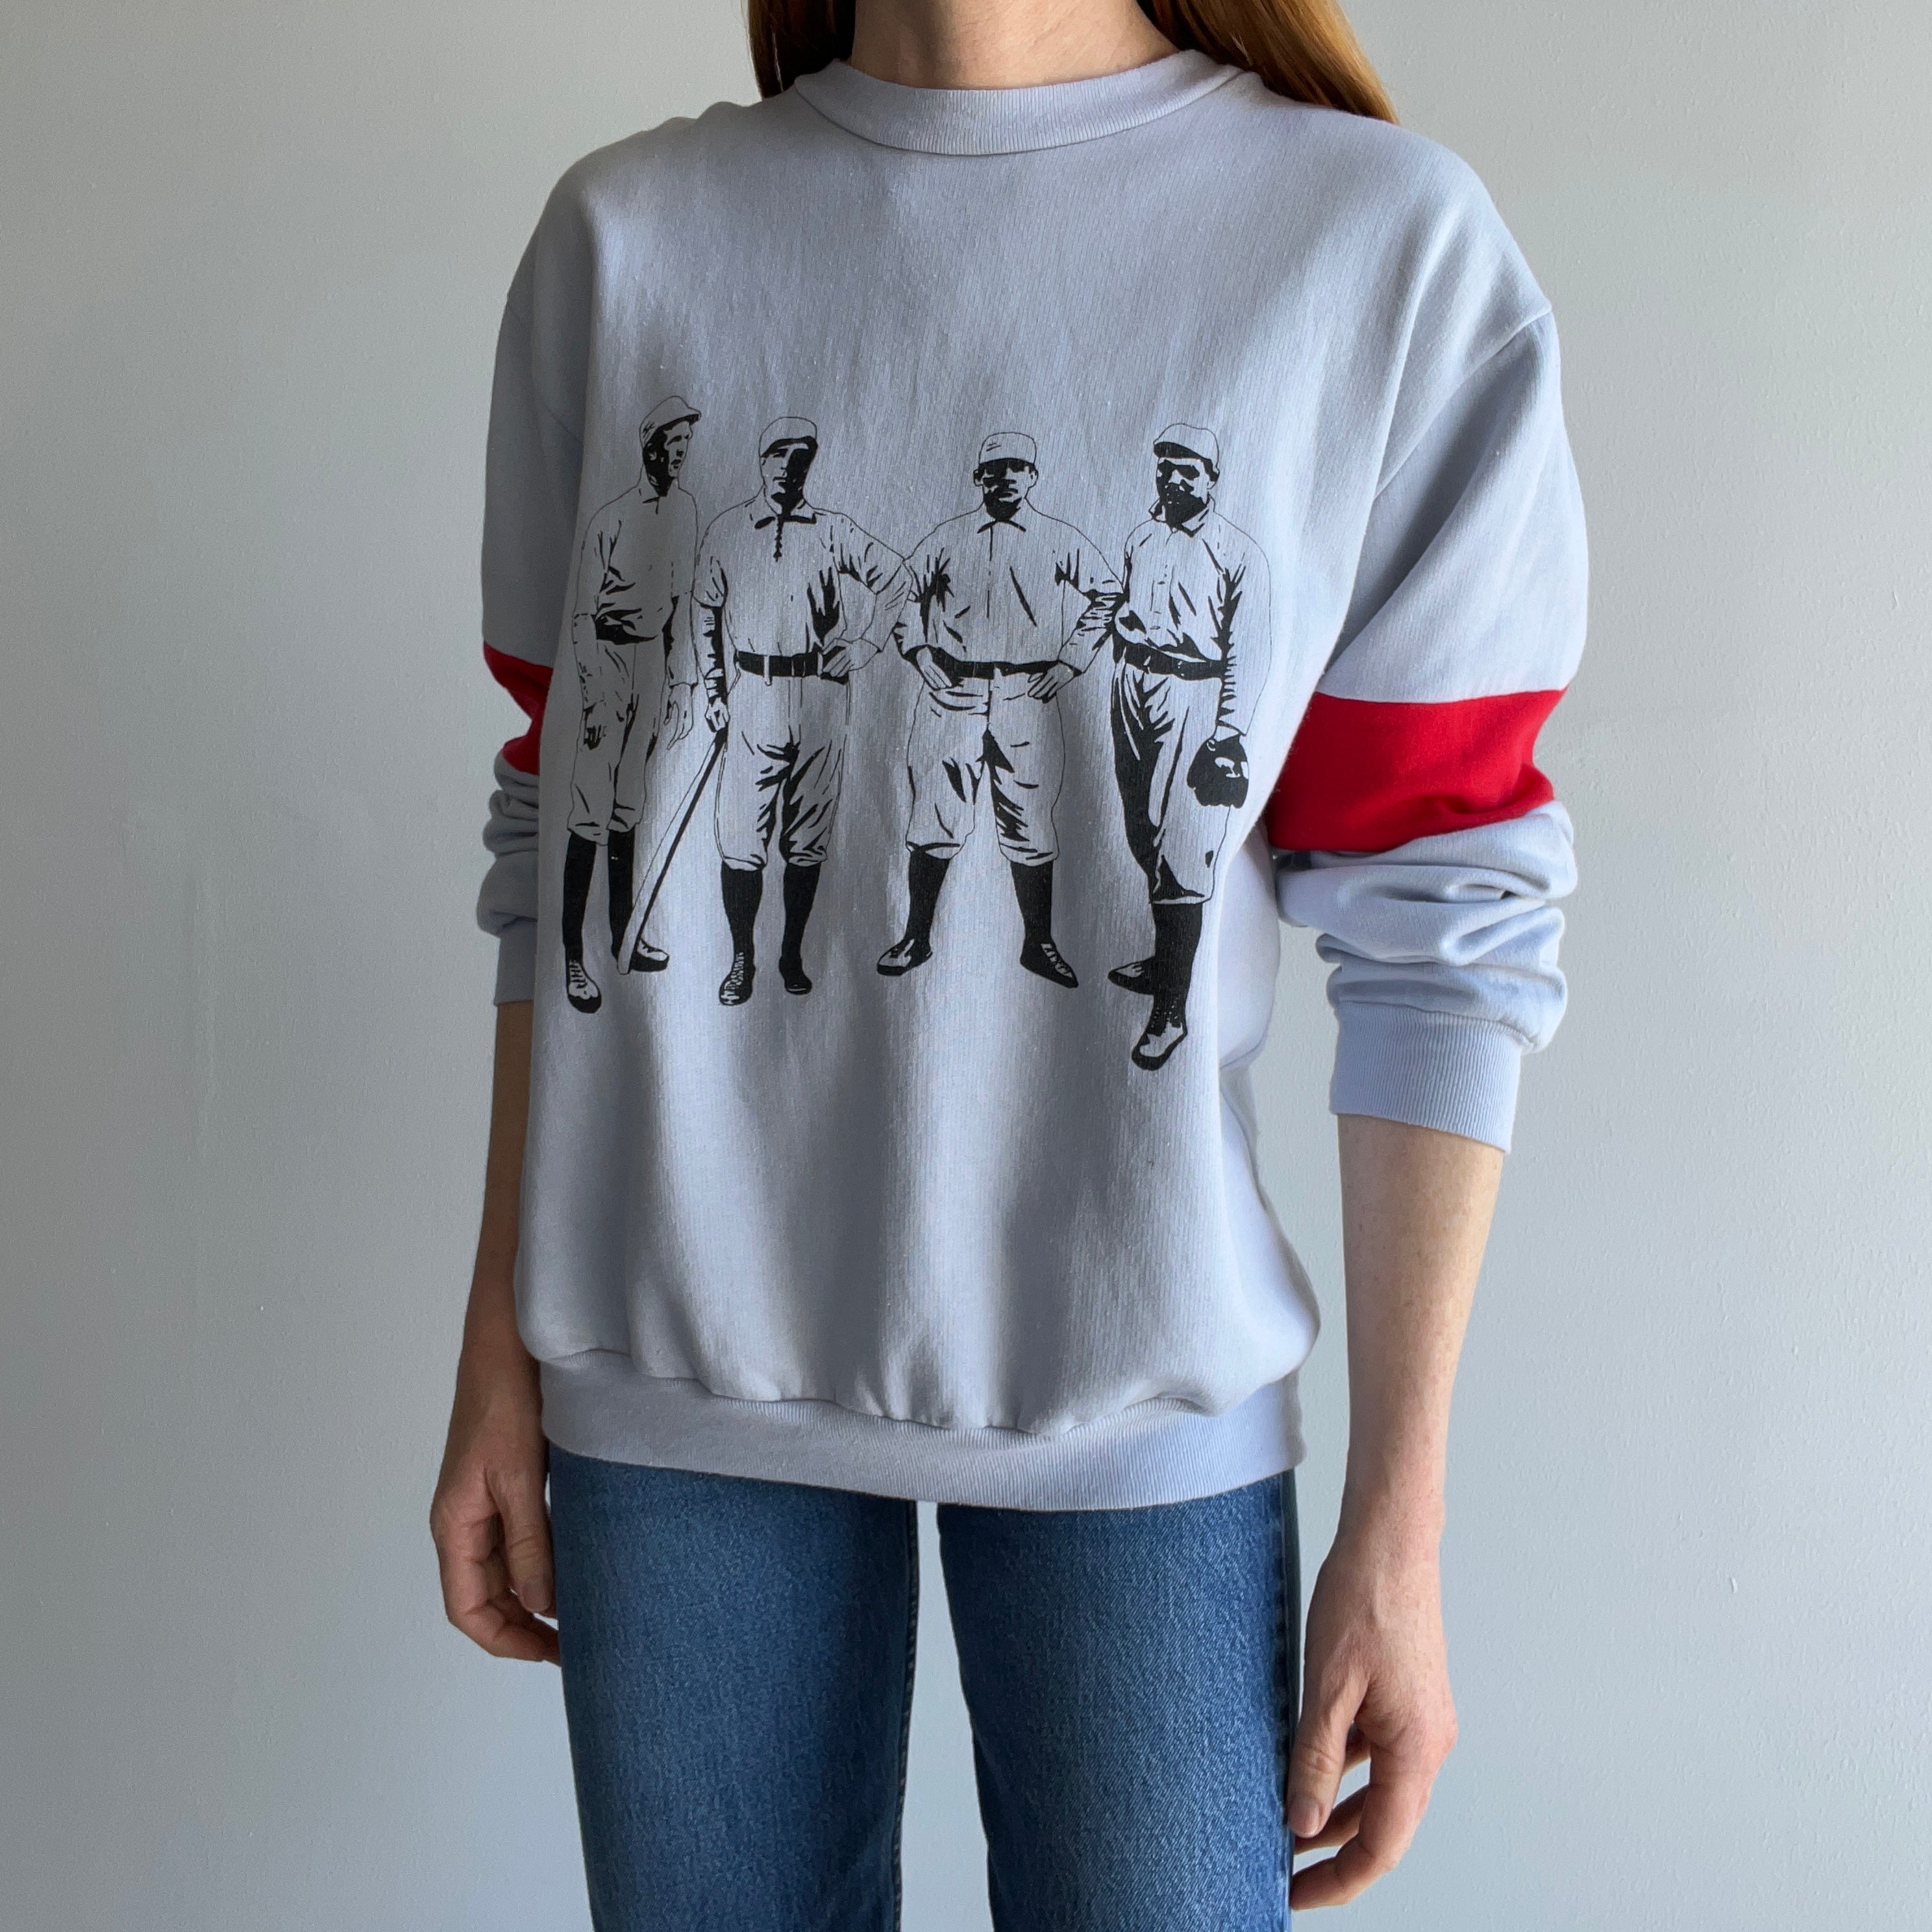 1980s - 1927 Yankees Baseball Team Lightweight Sweatshirt